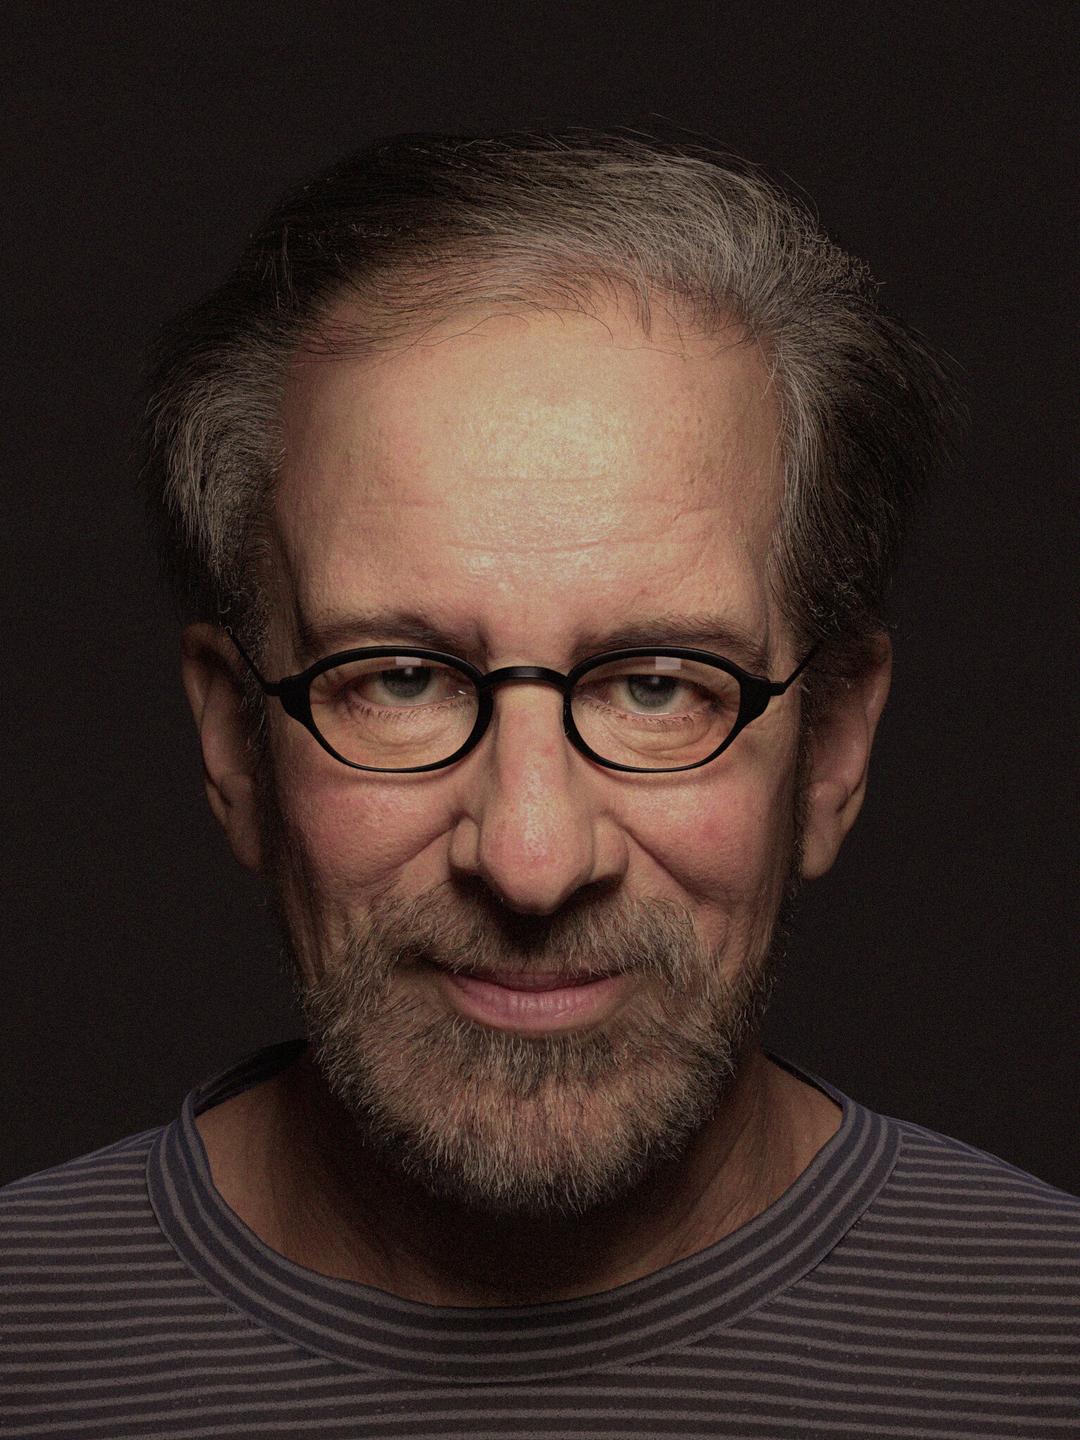 Steven Spielberg in real life